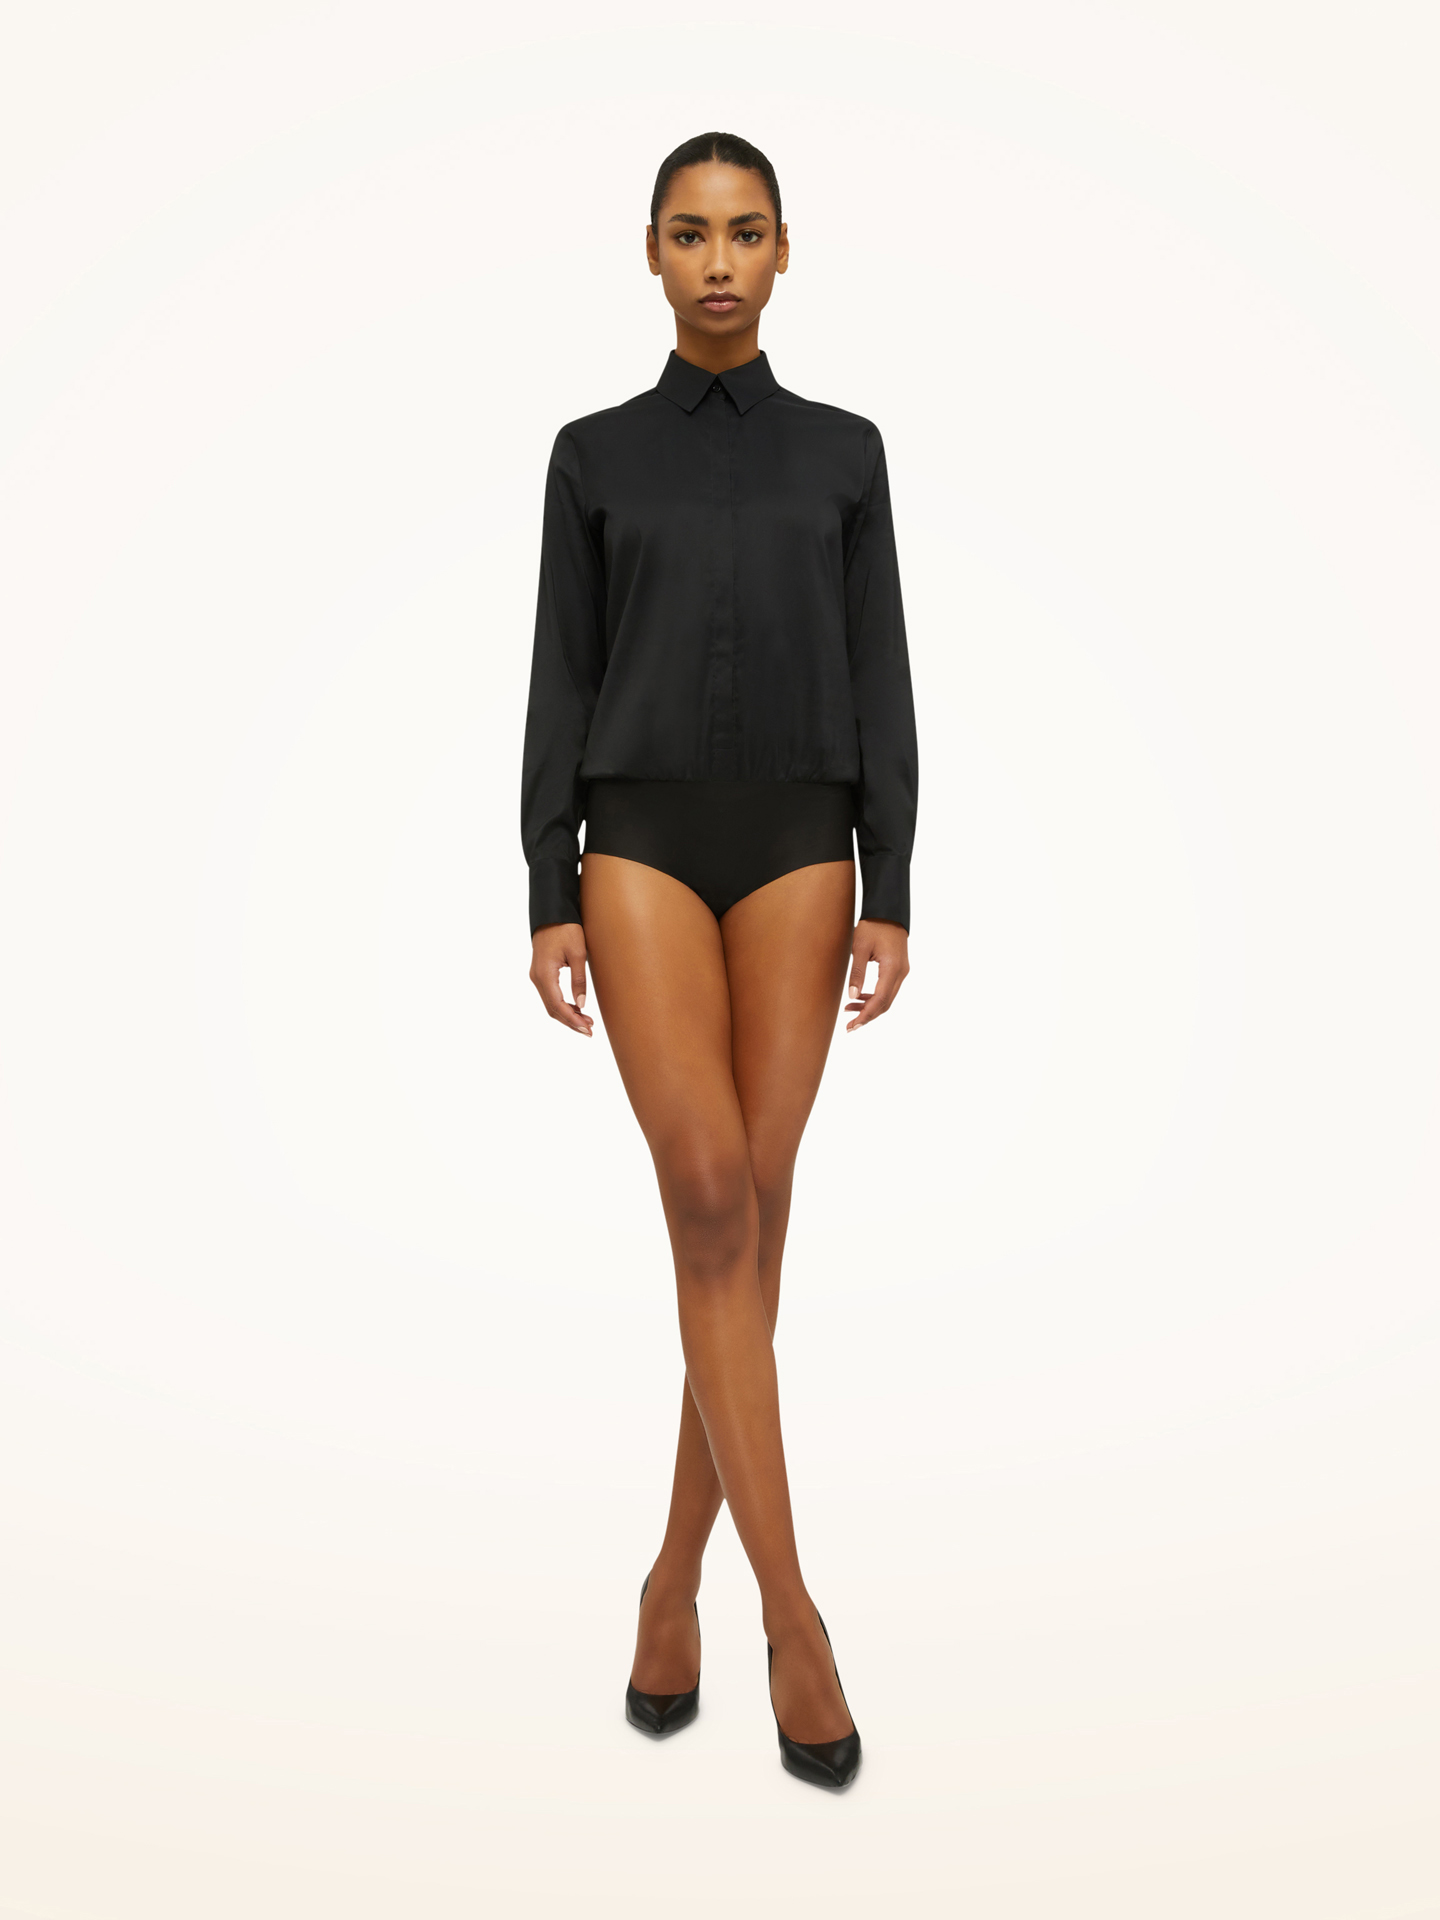 Wolford – London Effect Panty Body, Frau, black, Größe: 36